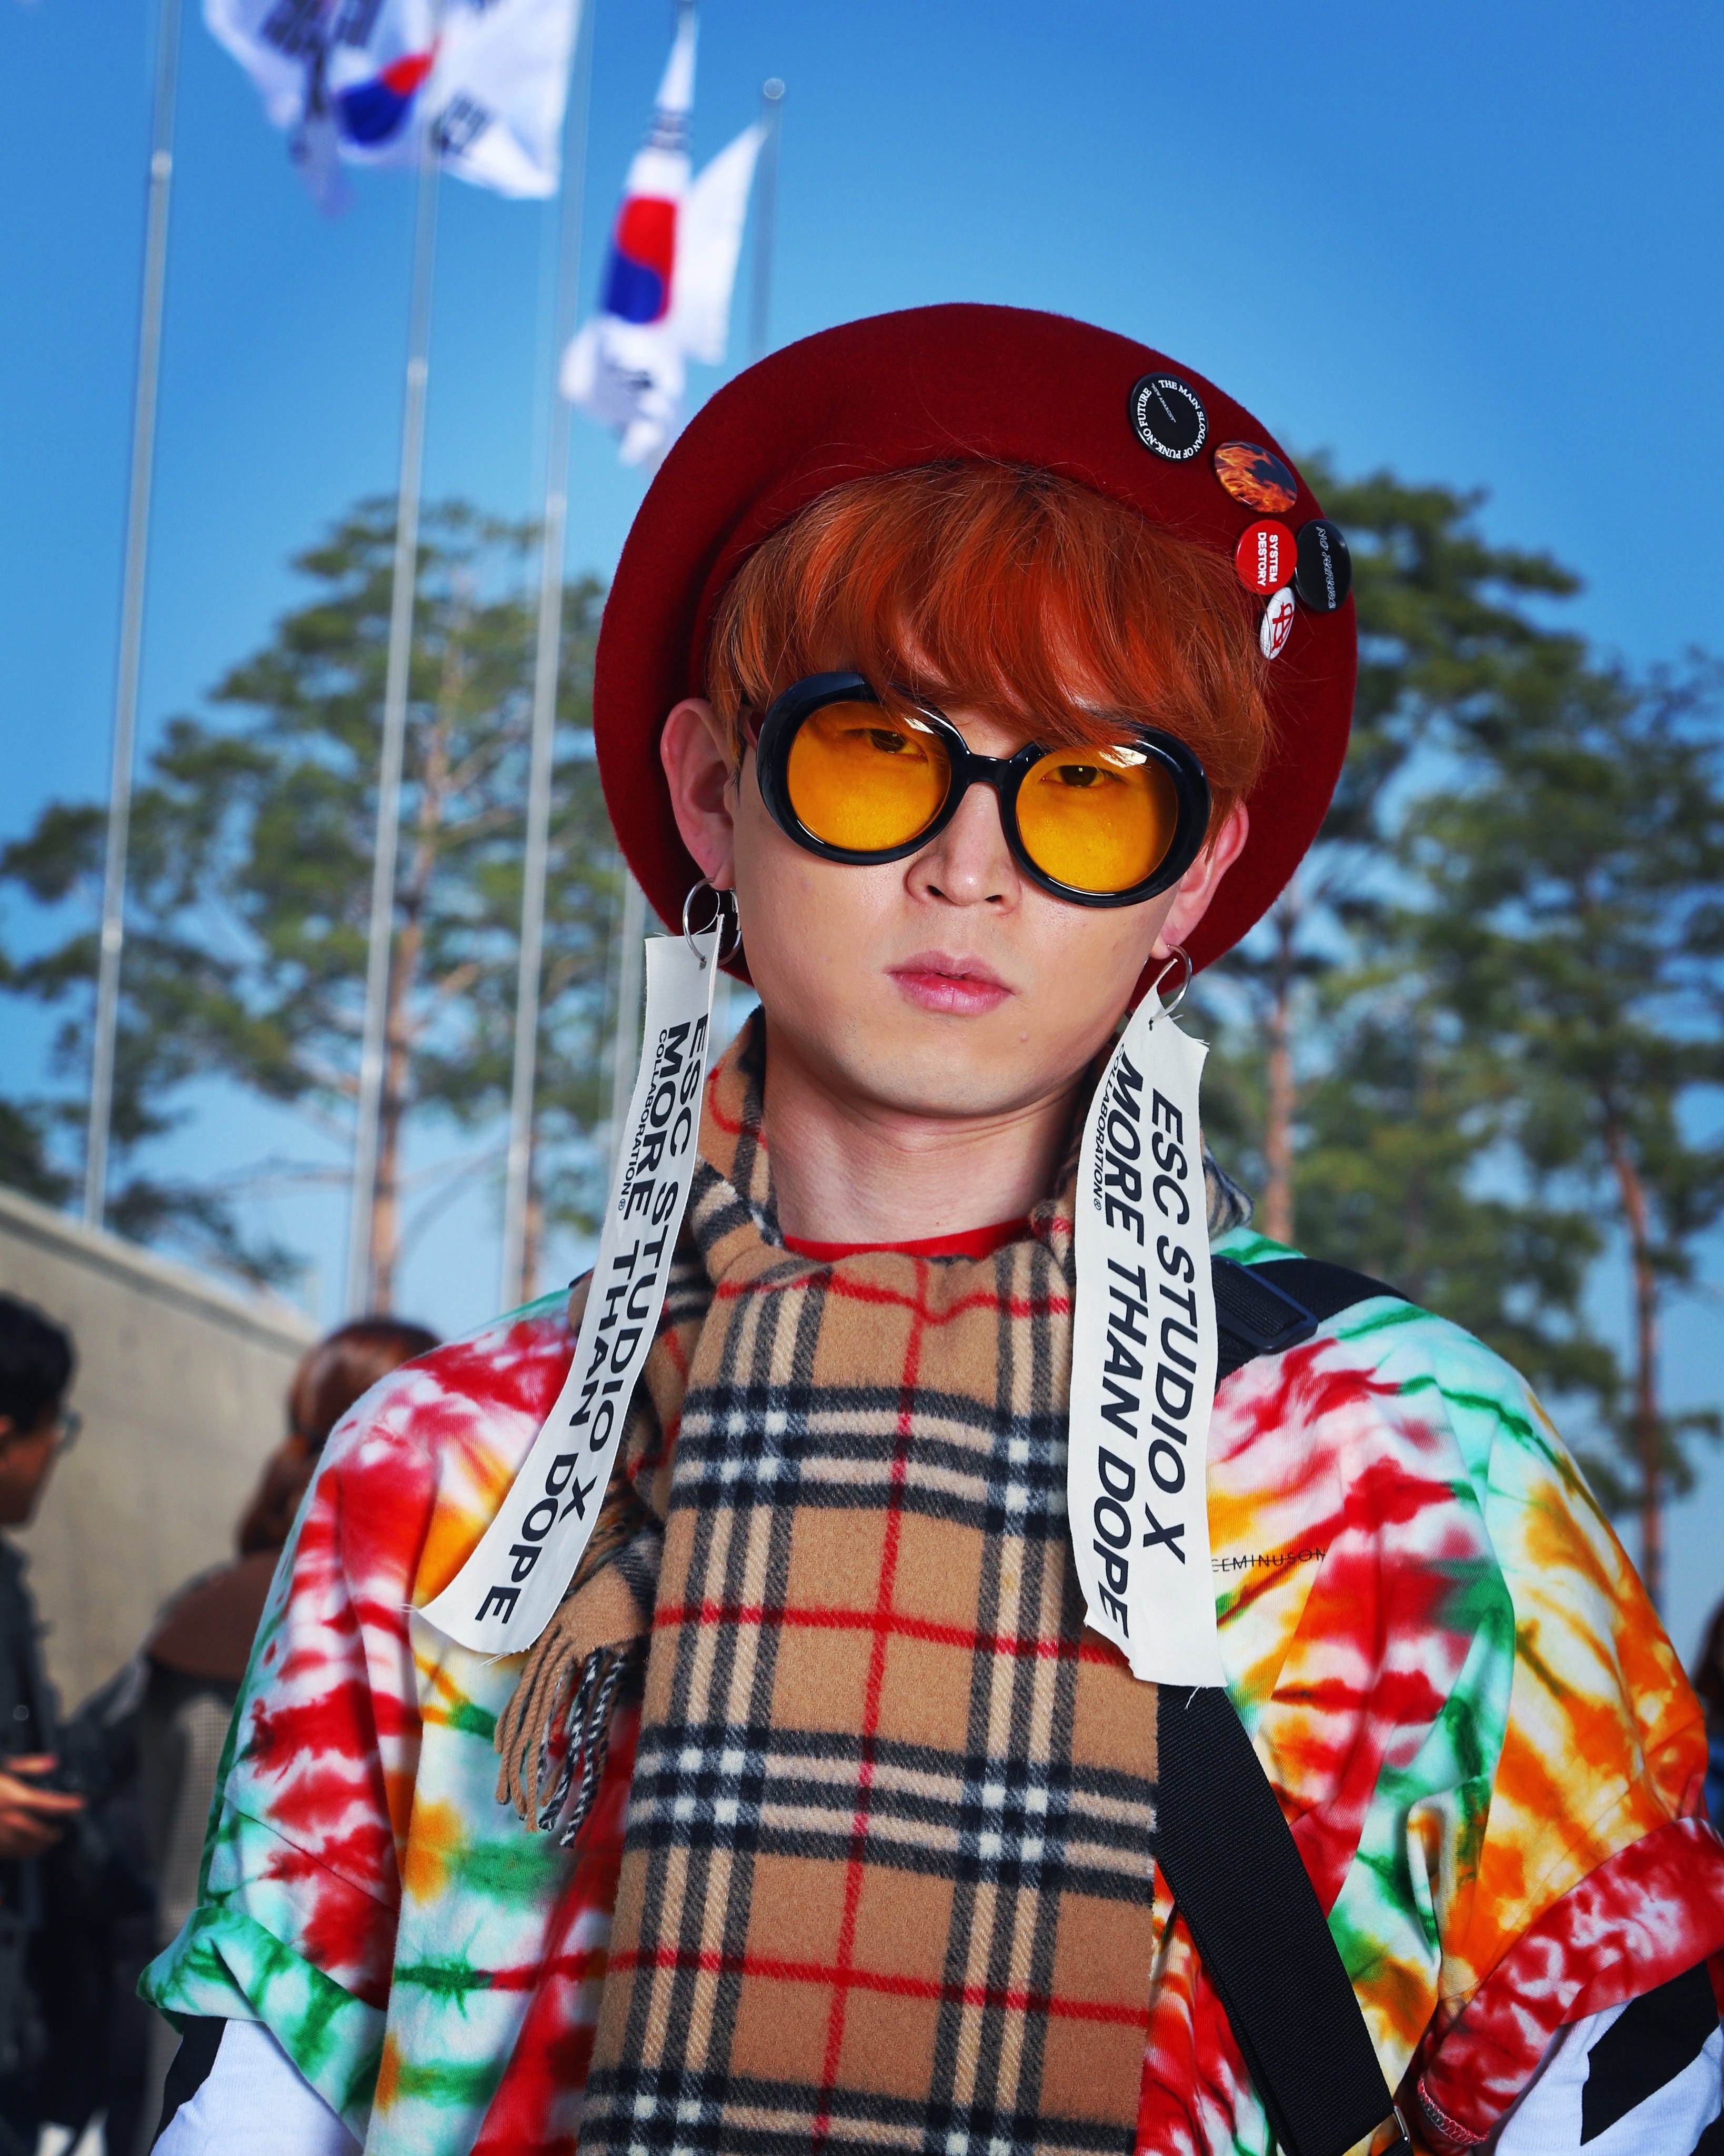 Korea's next top model targets New York Fashion Week - The Korea Times